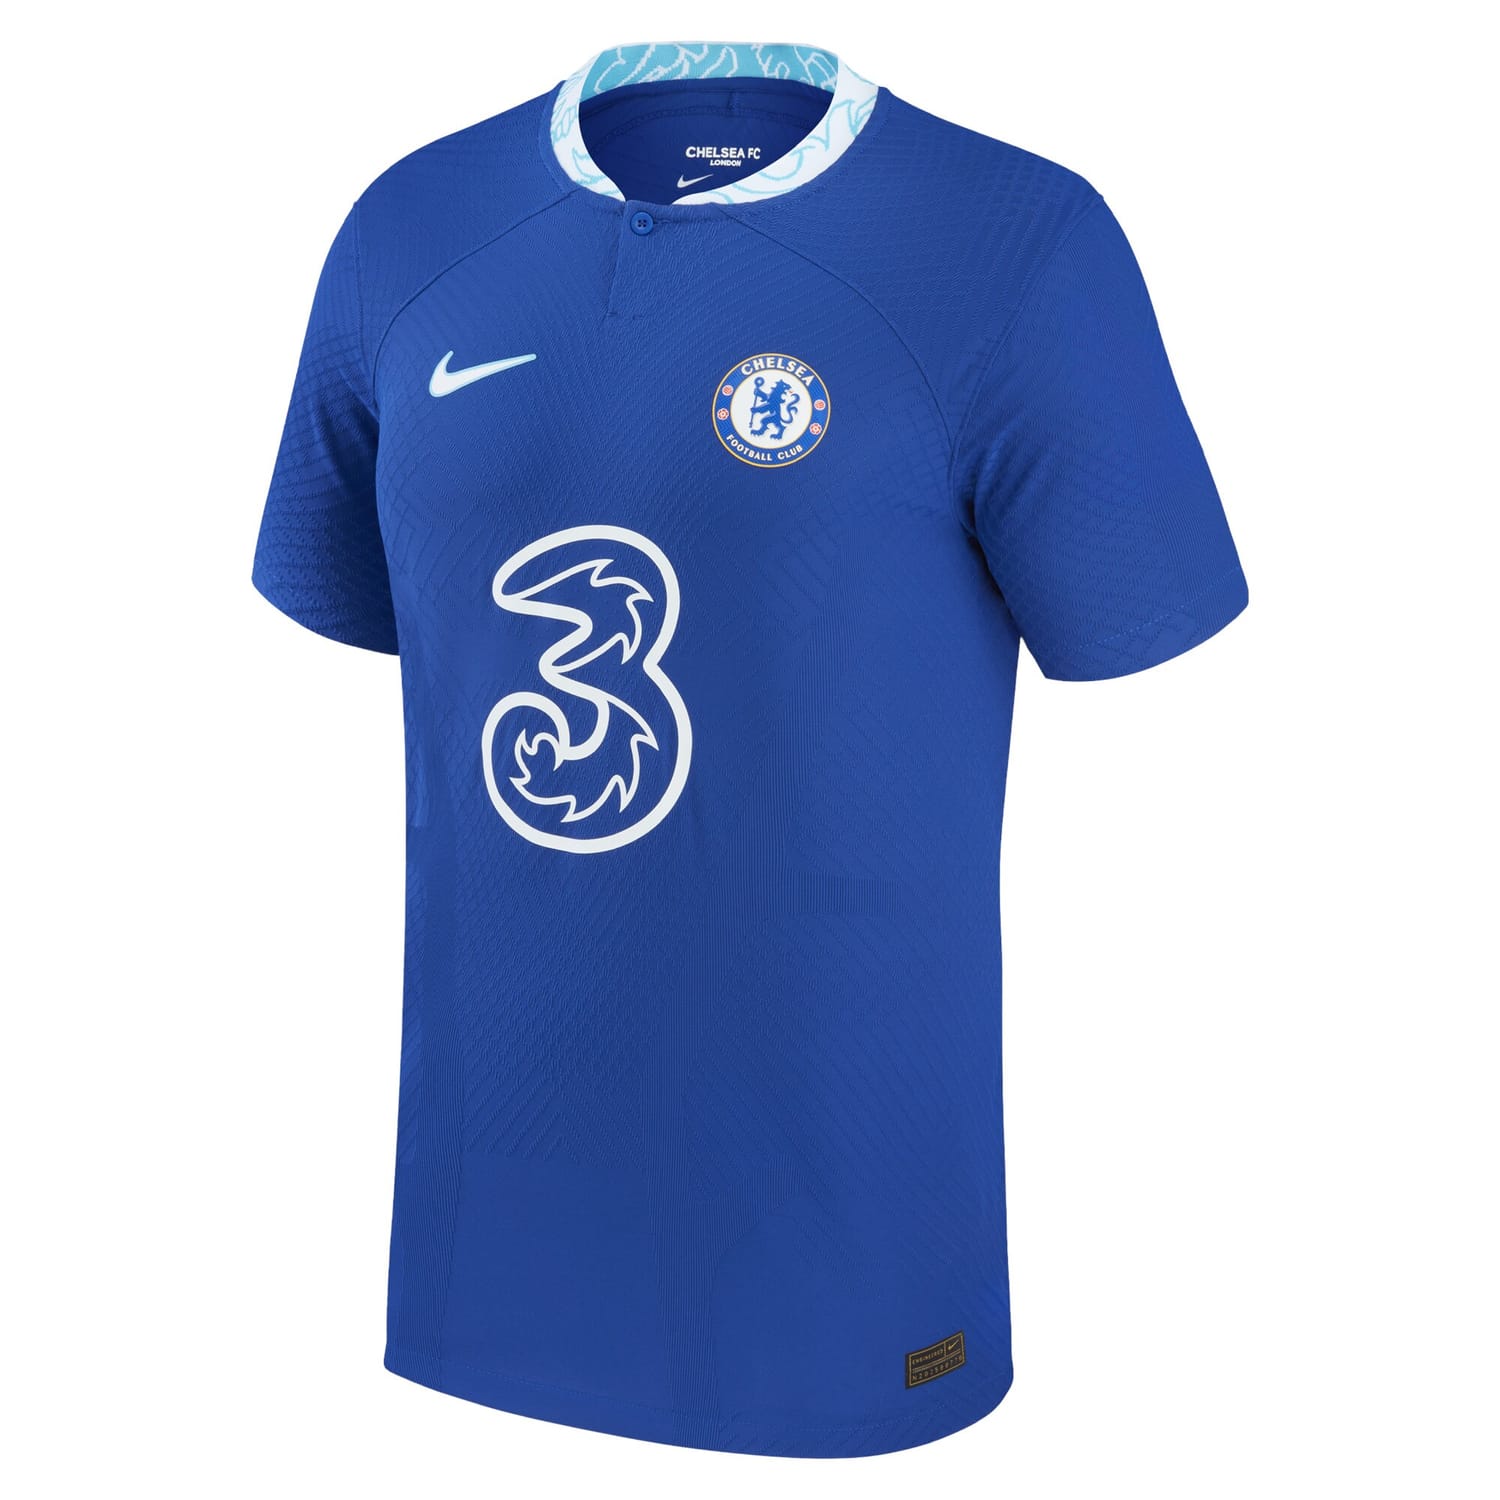 Premier League Chelsea Home Authentic Jersey Shirt 2022-23 player David Datro Fofana 27 printing for Men